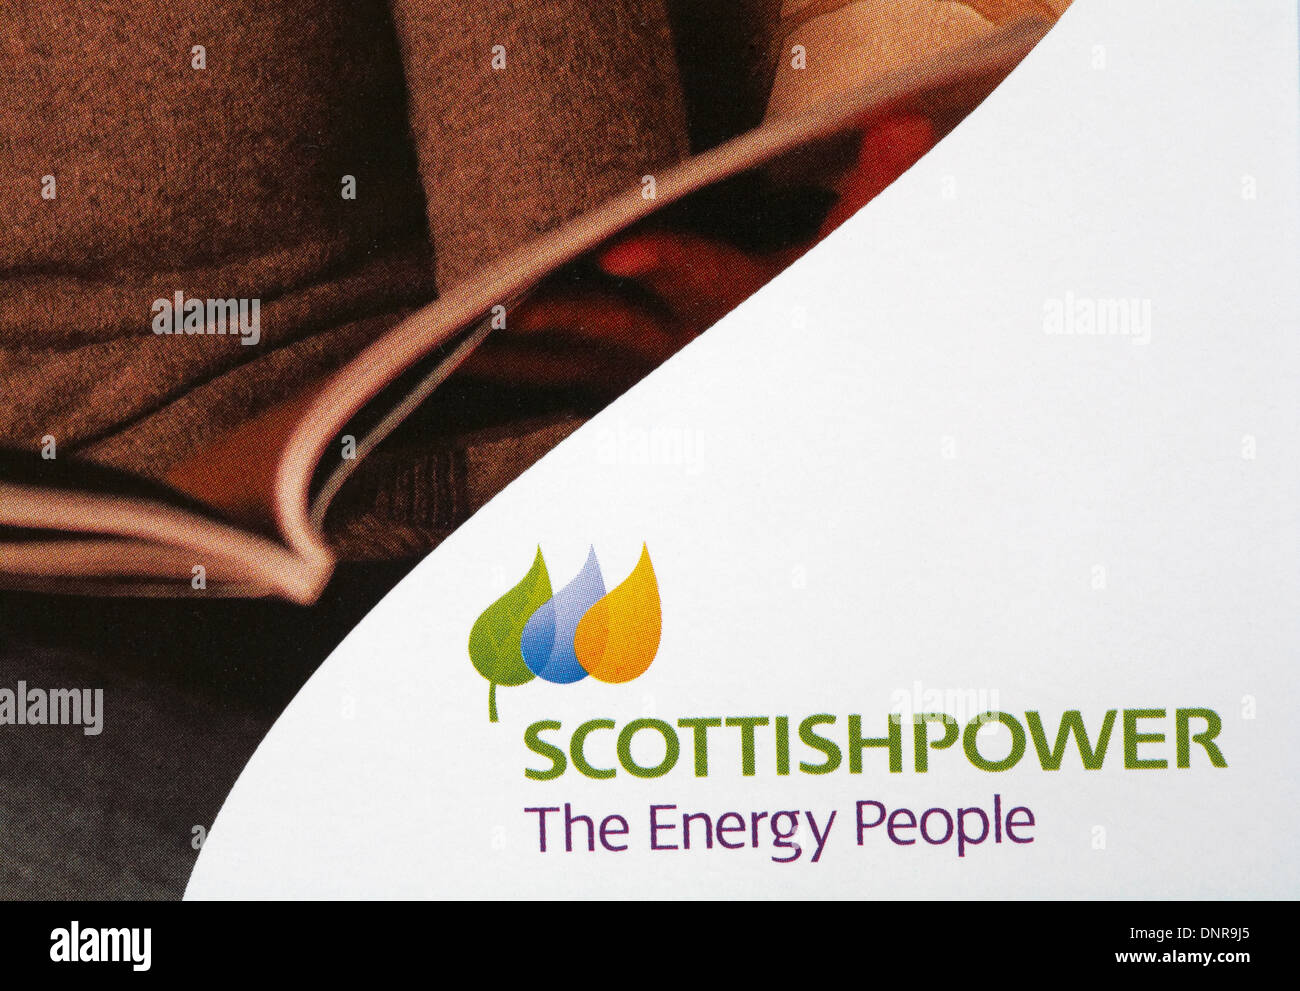 scottishpower-el-logo-de-energy-people-fotos-e-im-genes-de-stock-alamy